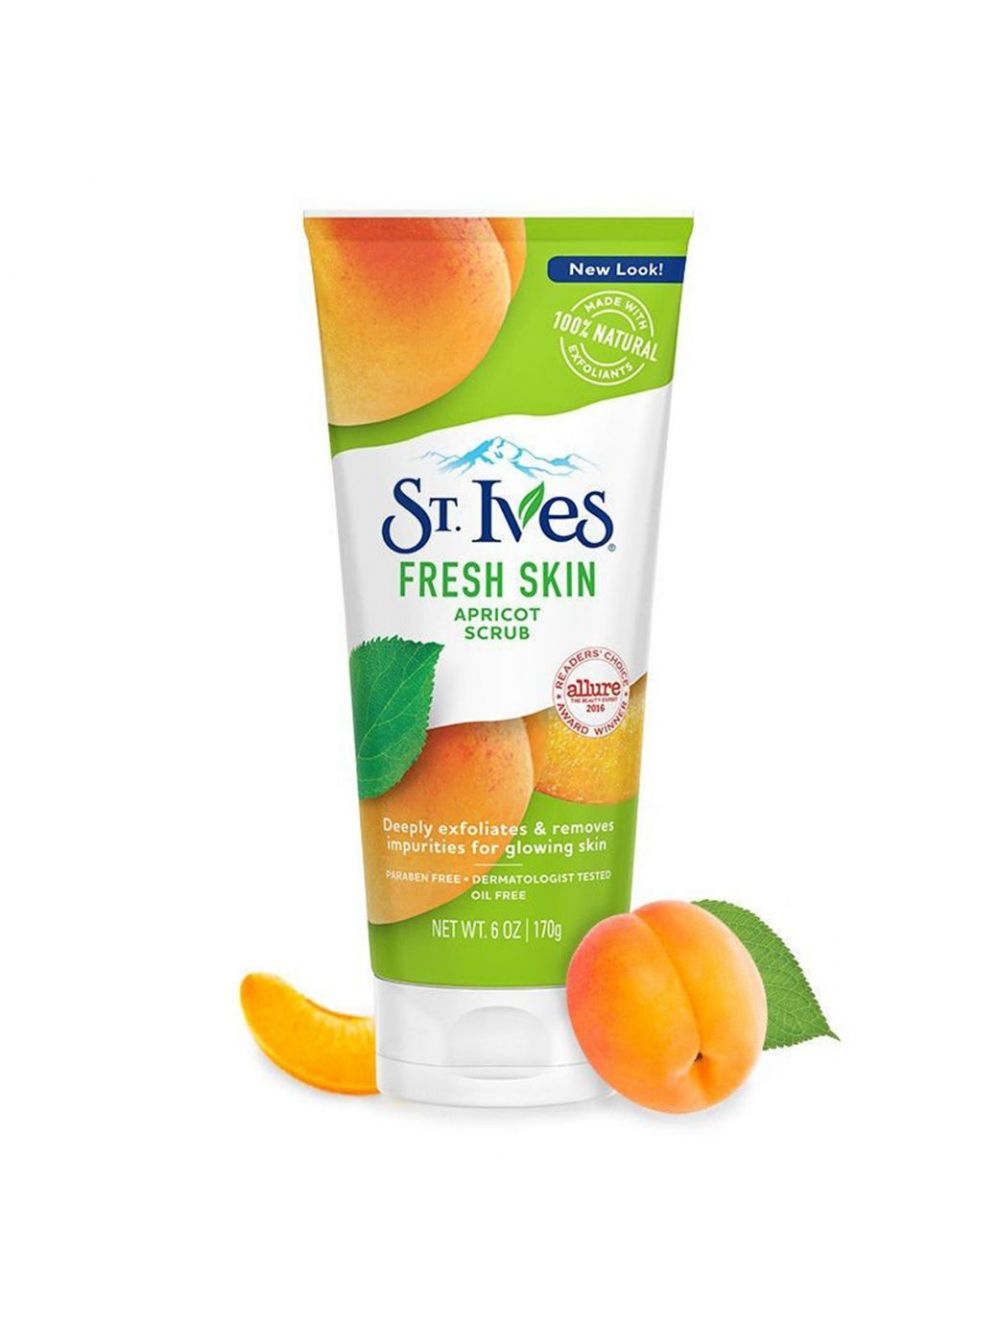 St. Ives Fresh Skin Apricot Face Scrub (170gm)